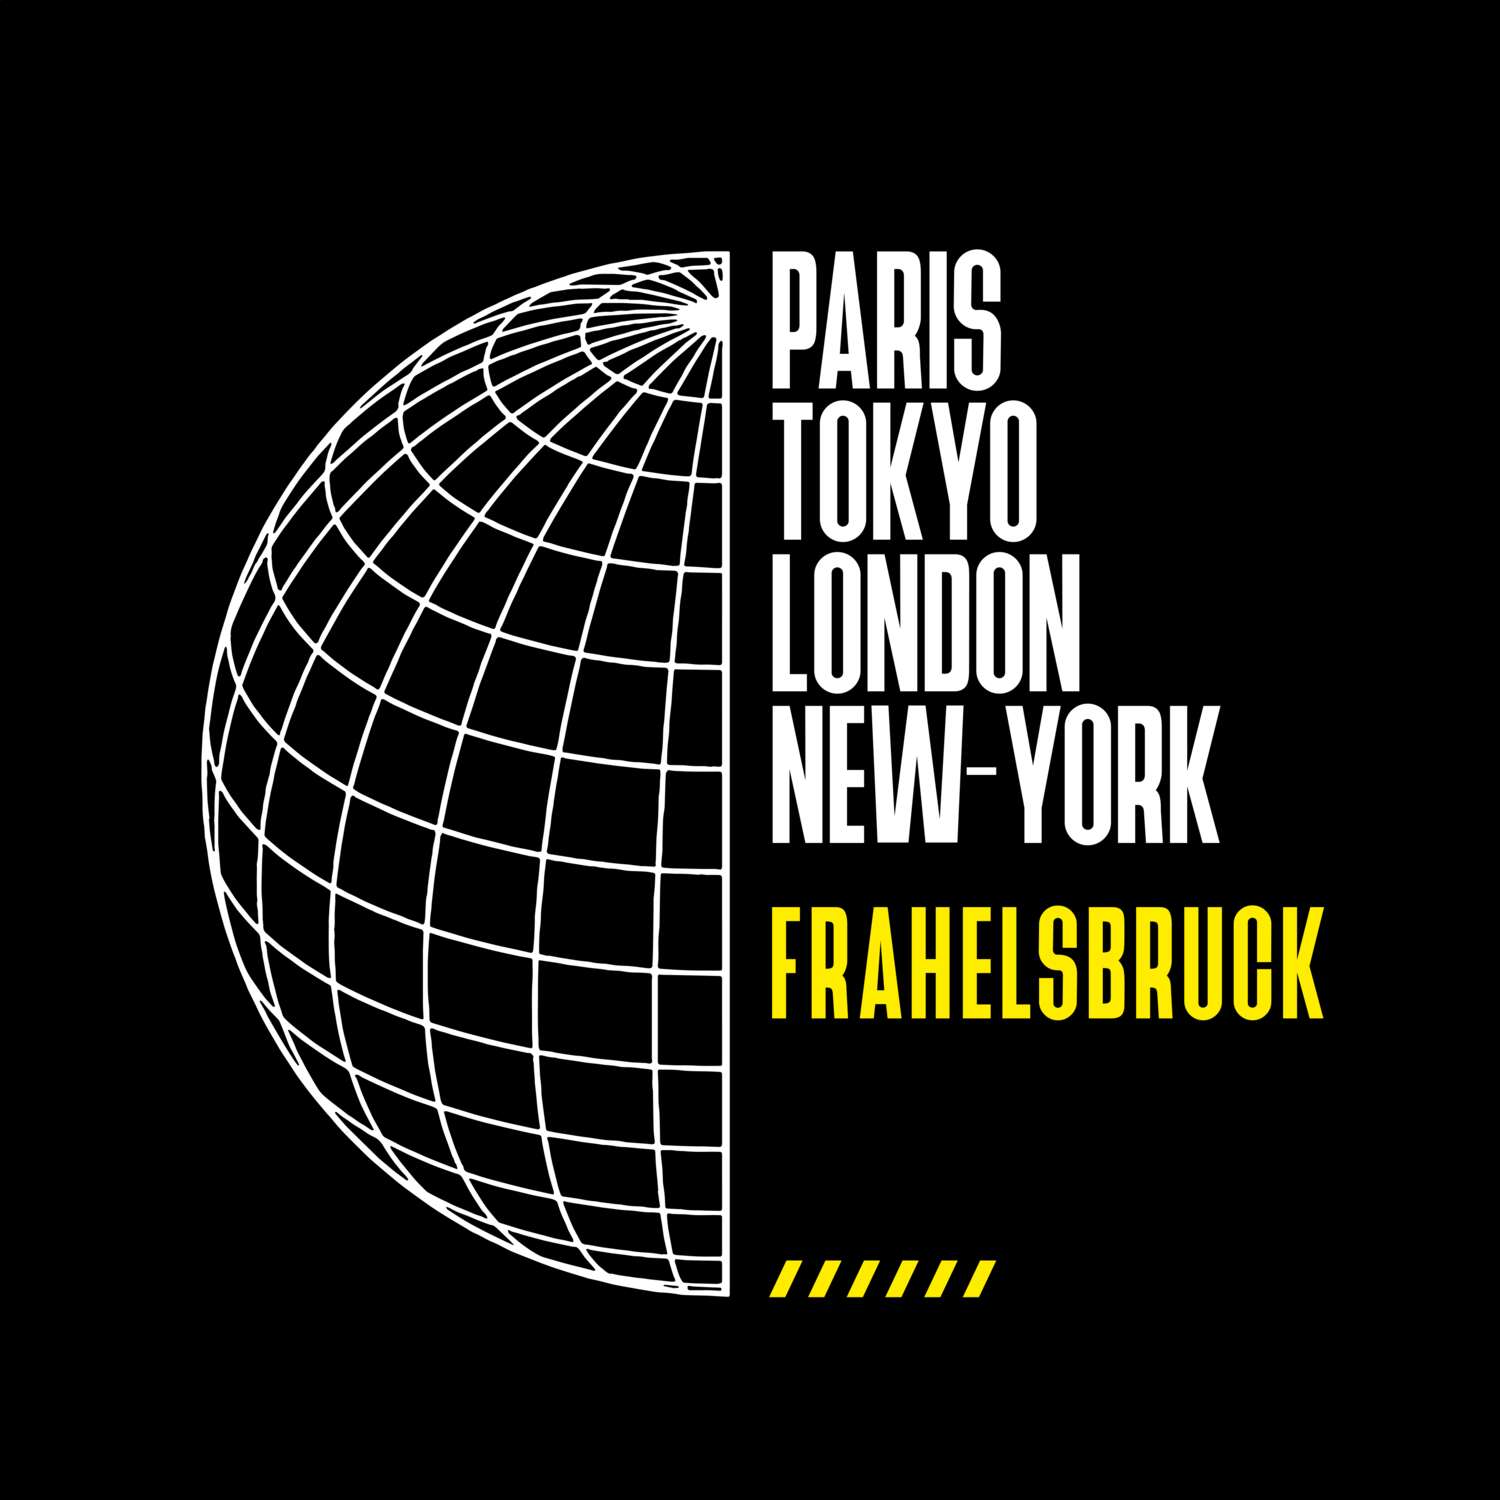 Frahelsbruck T-Shirt »Paris Tokyo London«